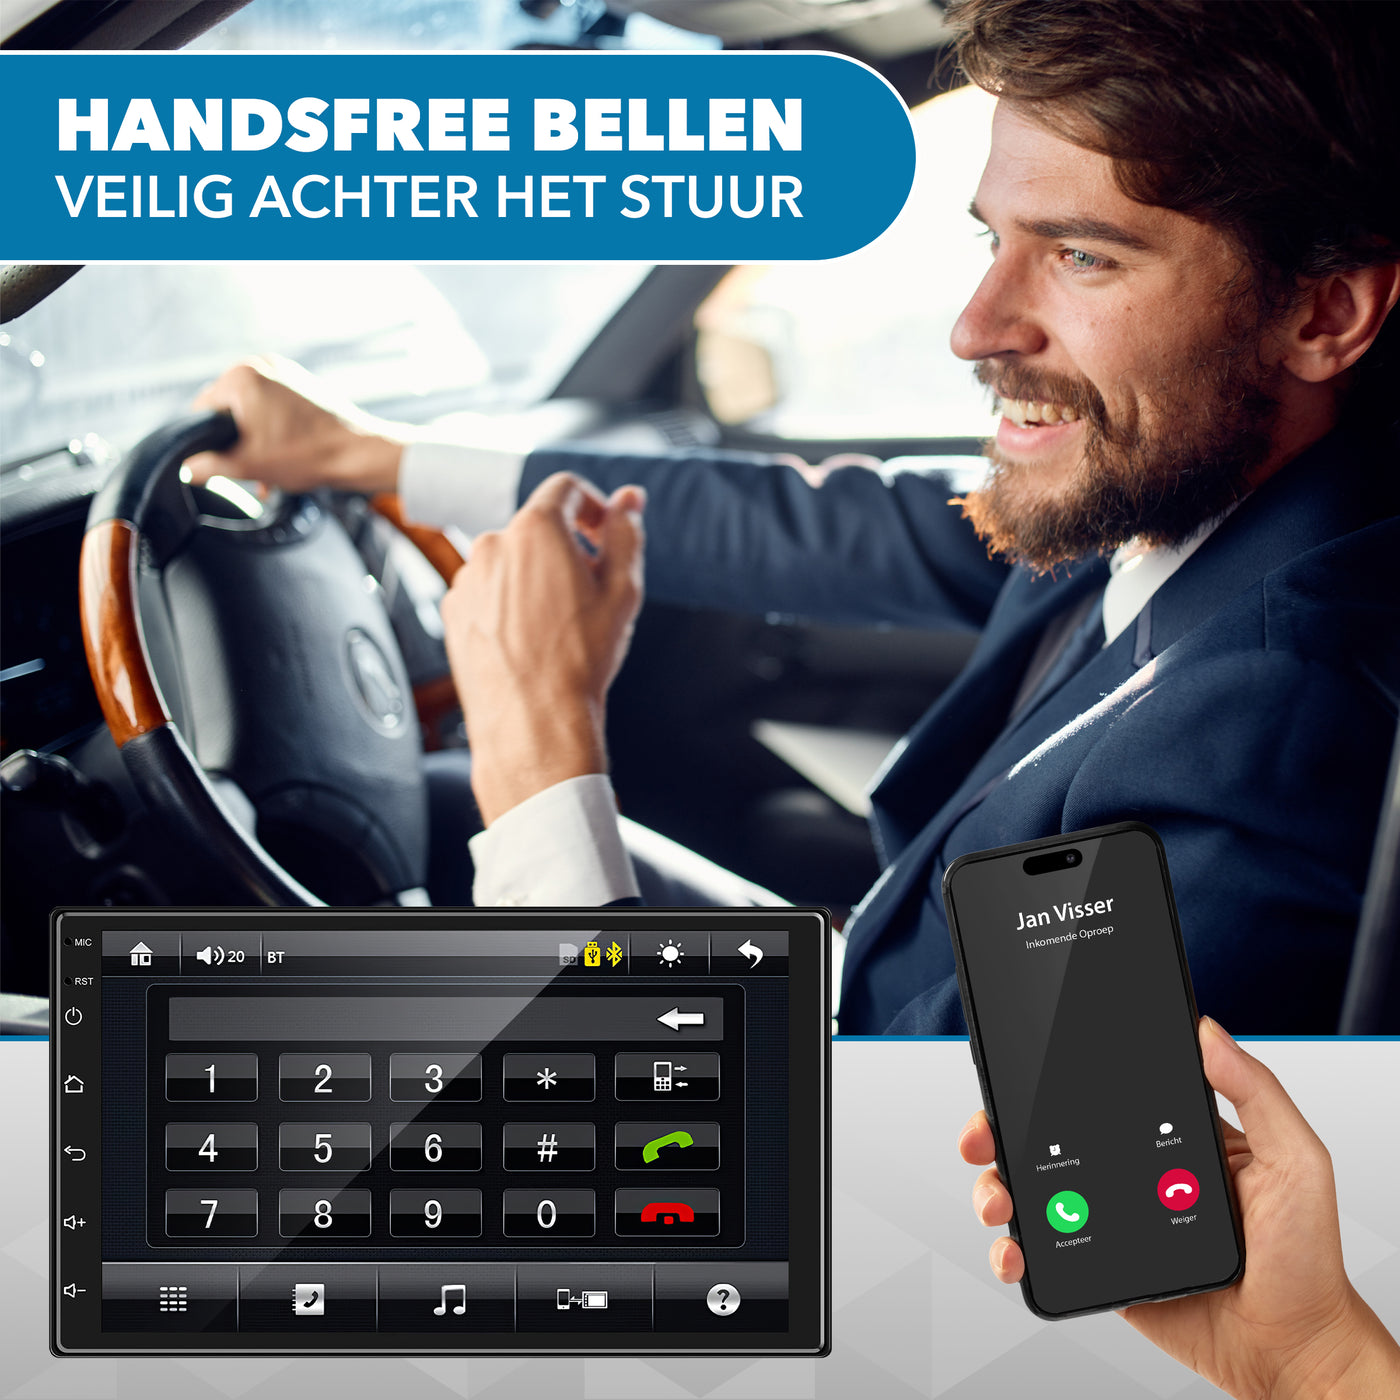 Universele Autoradio - Apple Carplay & Android Auto -Bluetooth - Navigatie - Handsfree - Android met Google Play -7'' Touchscreen